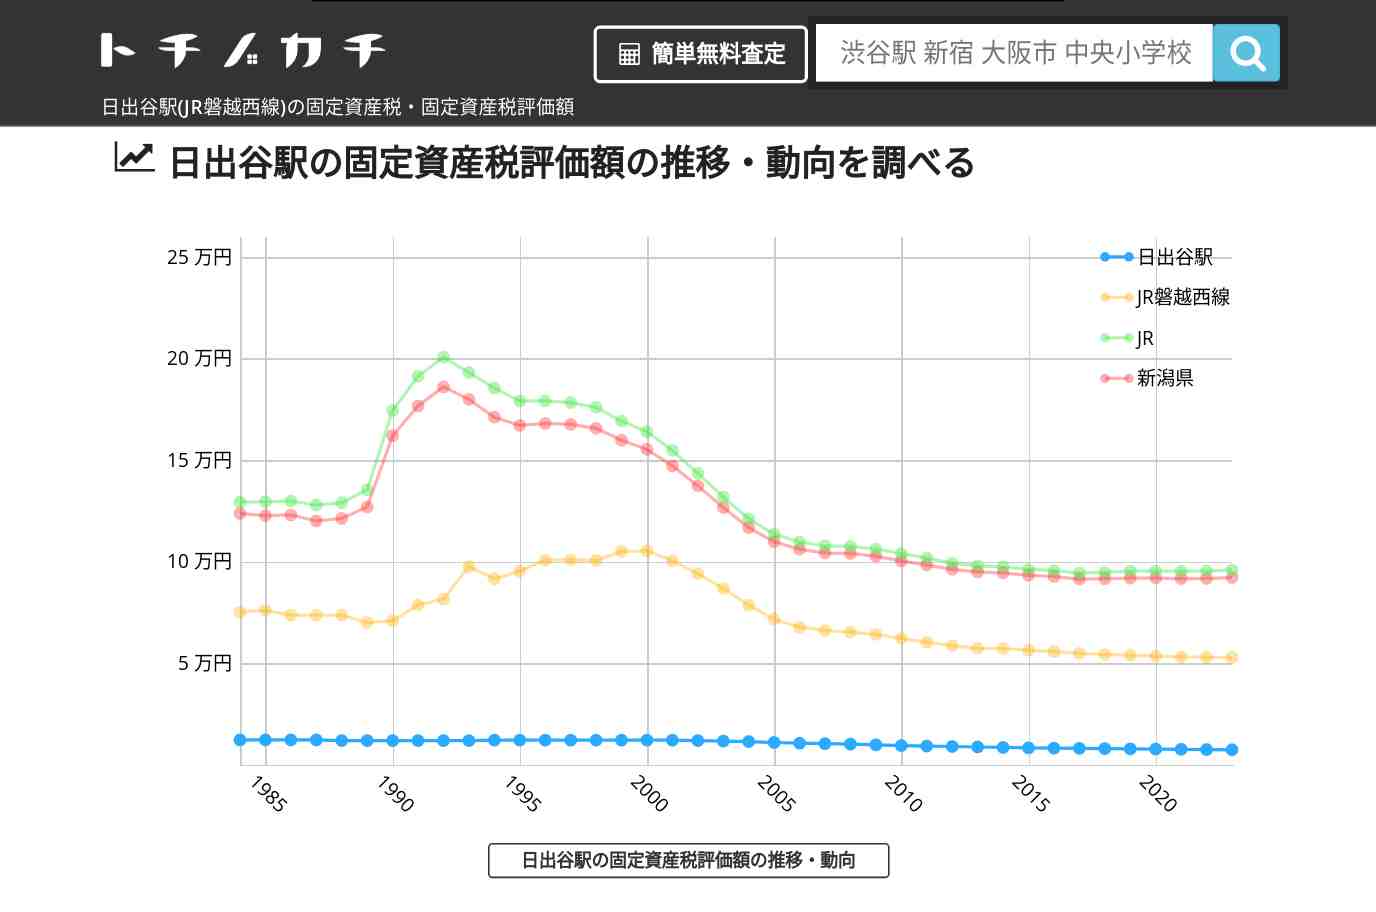 日出谷駅(JR磐越西線)の固定資産税・固定資産税評価額 | トチノカチ